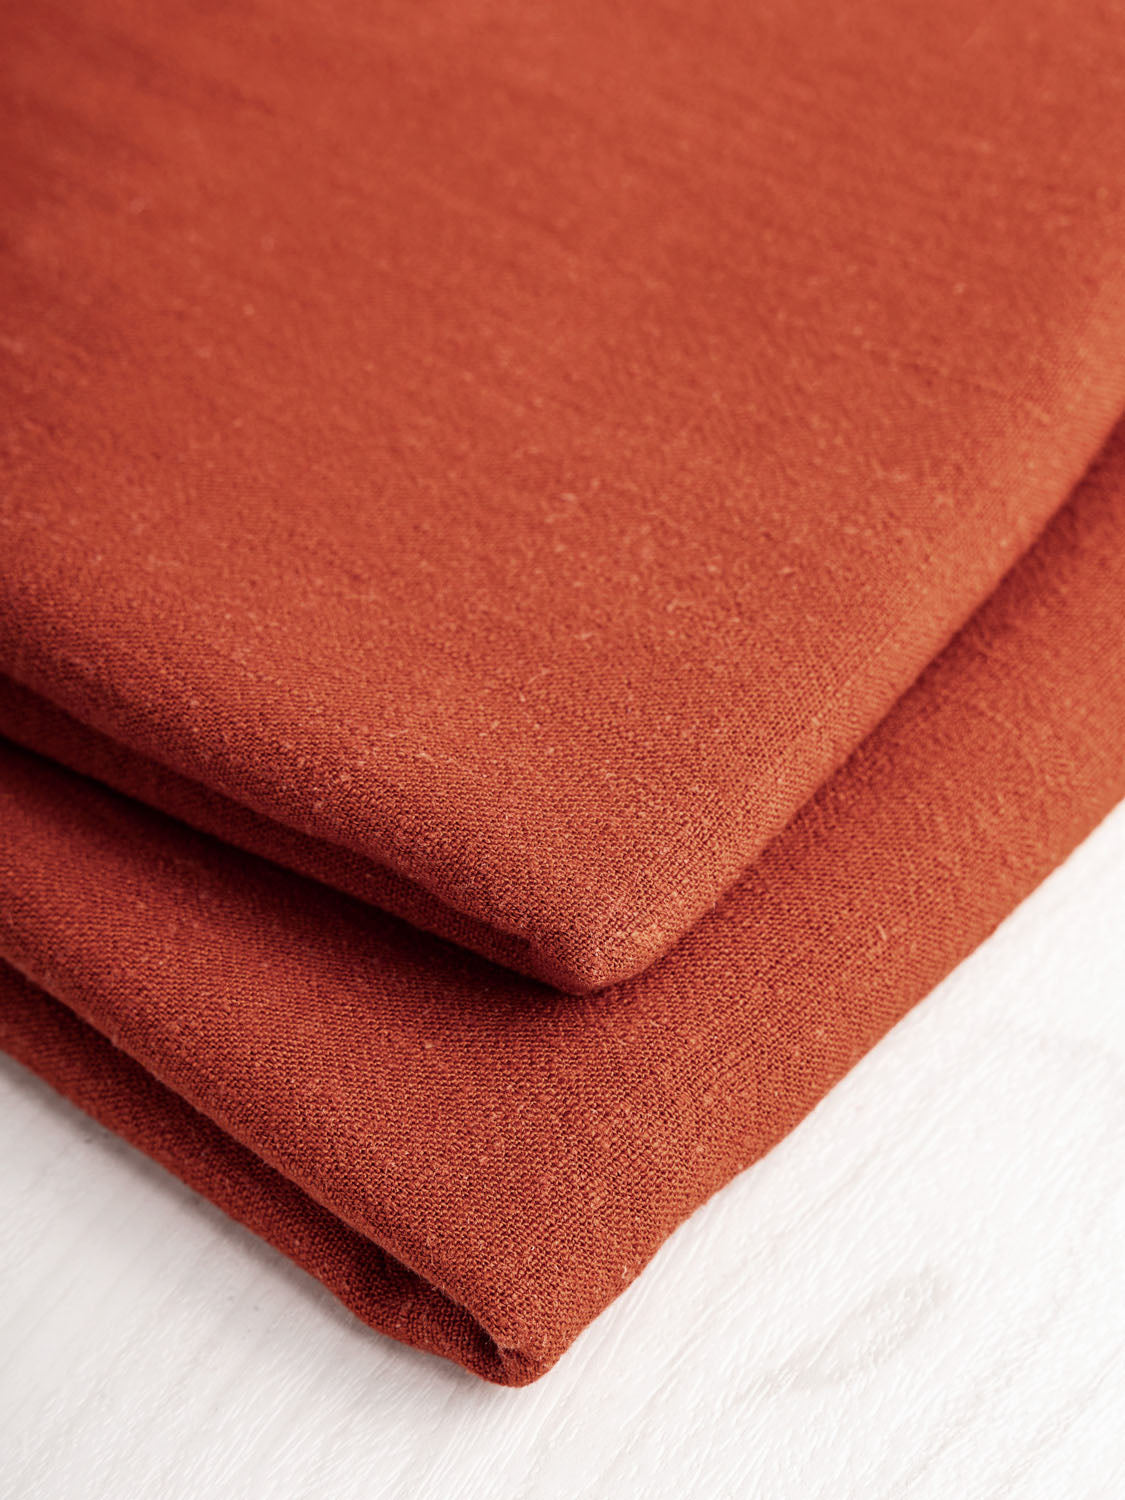 Textured handwoven, rust brown orange,100% cotton natural dye